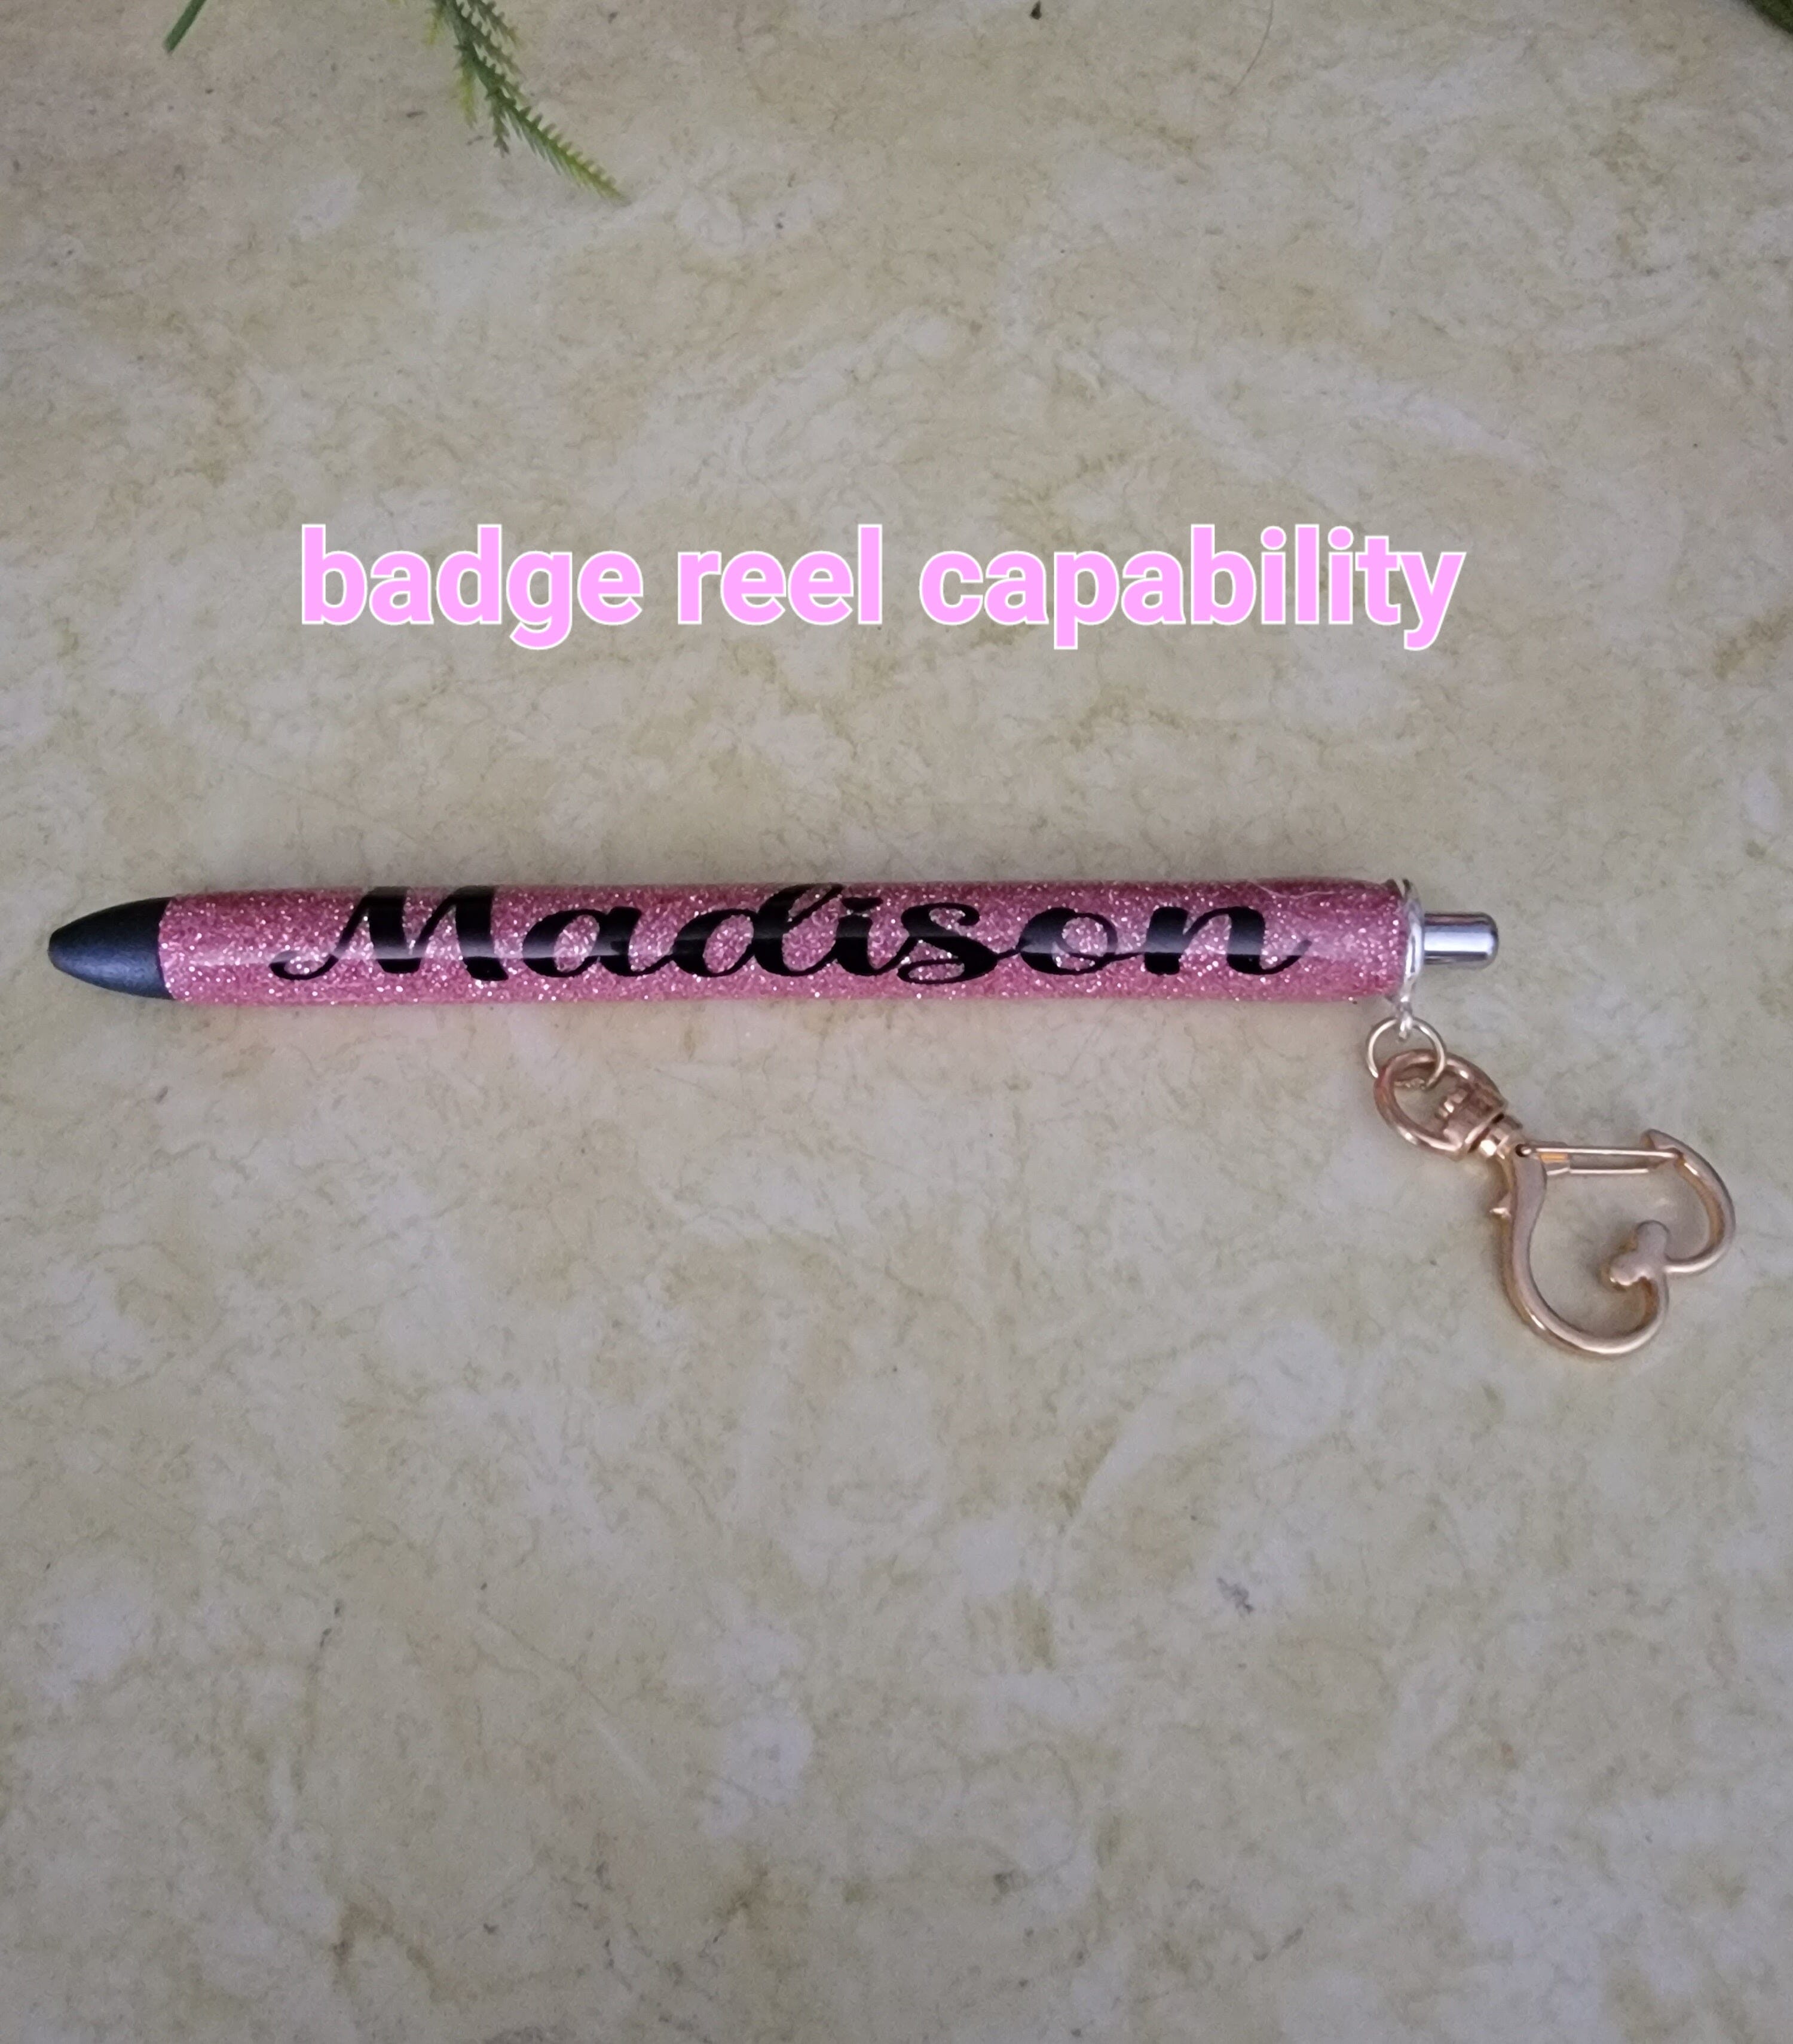 Custom glitter pens badge reel compatable birthday gifts nurse gifts